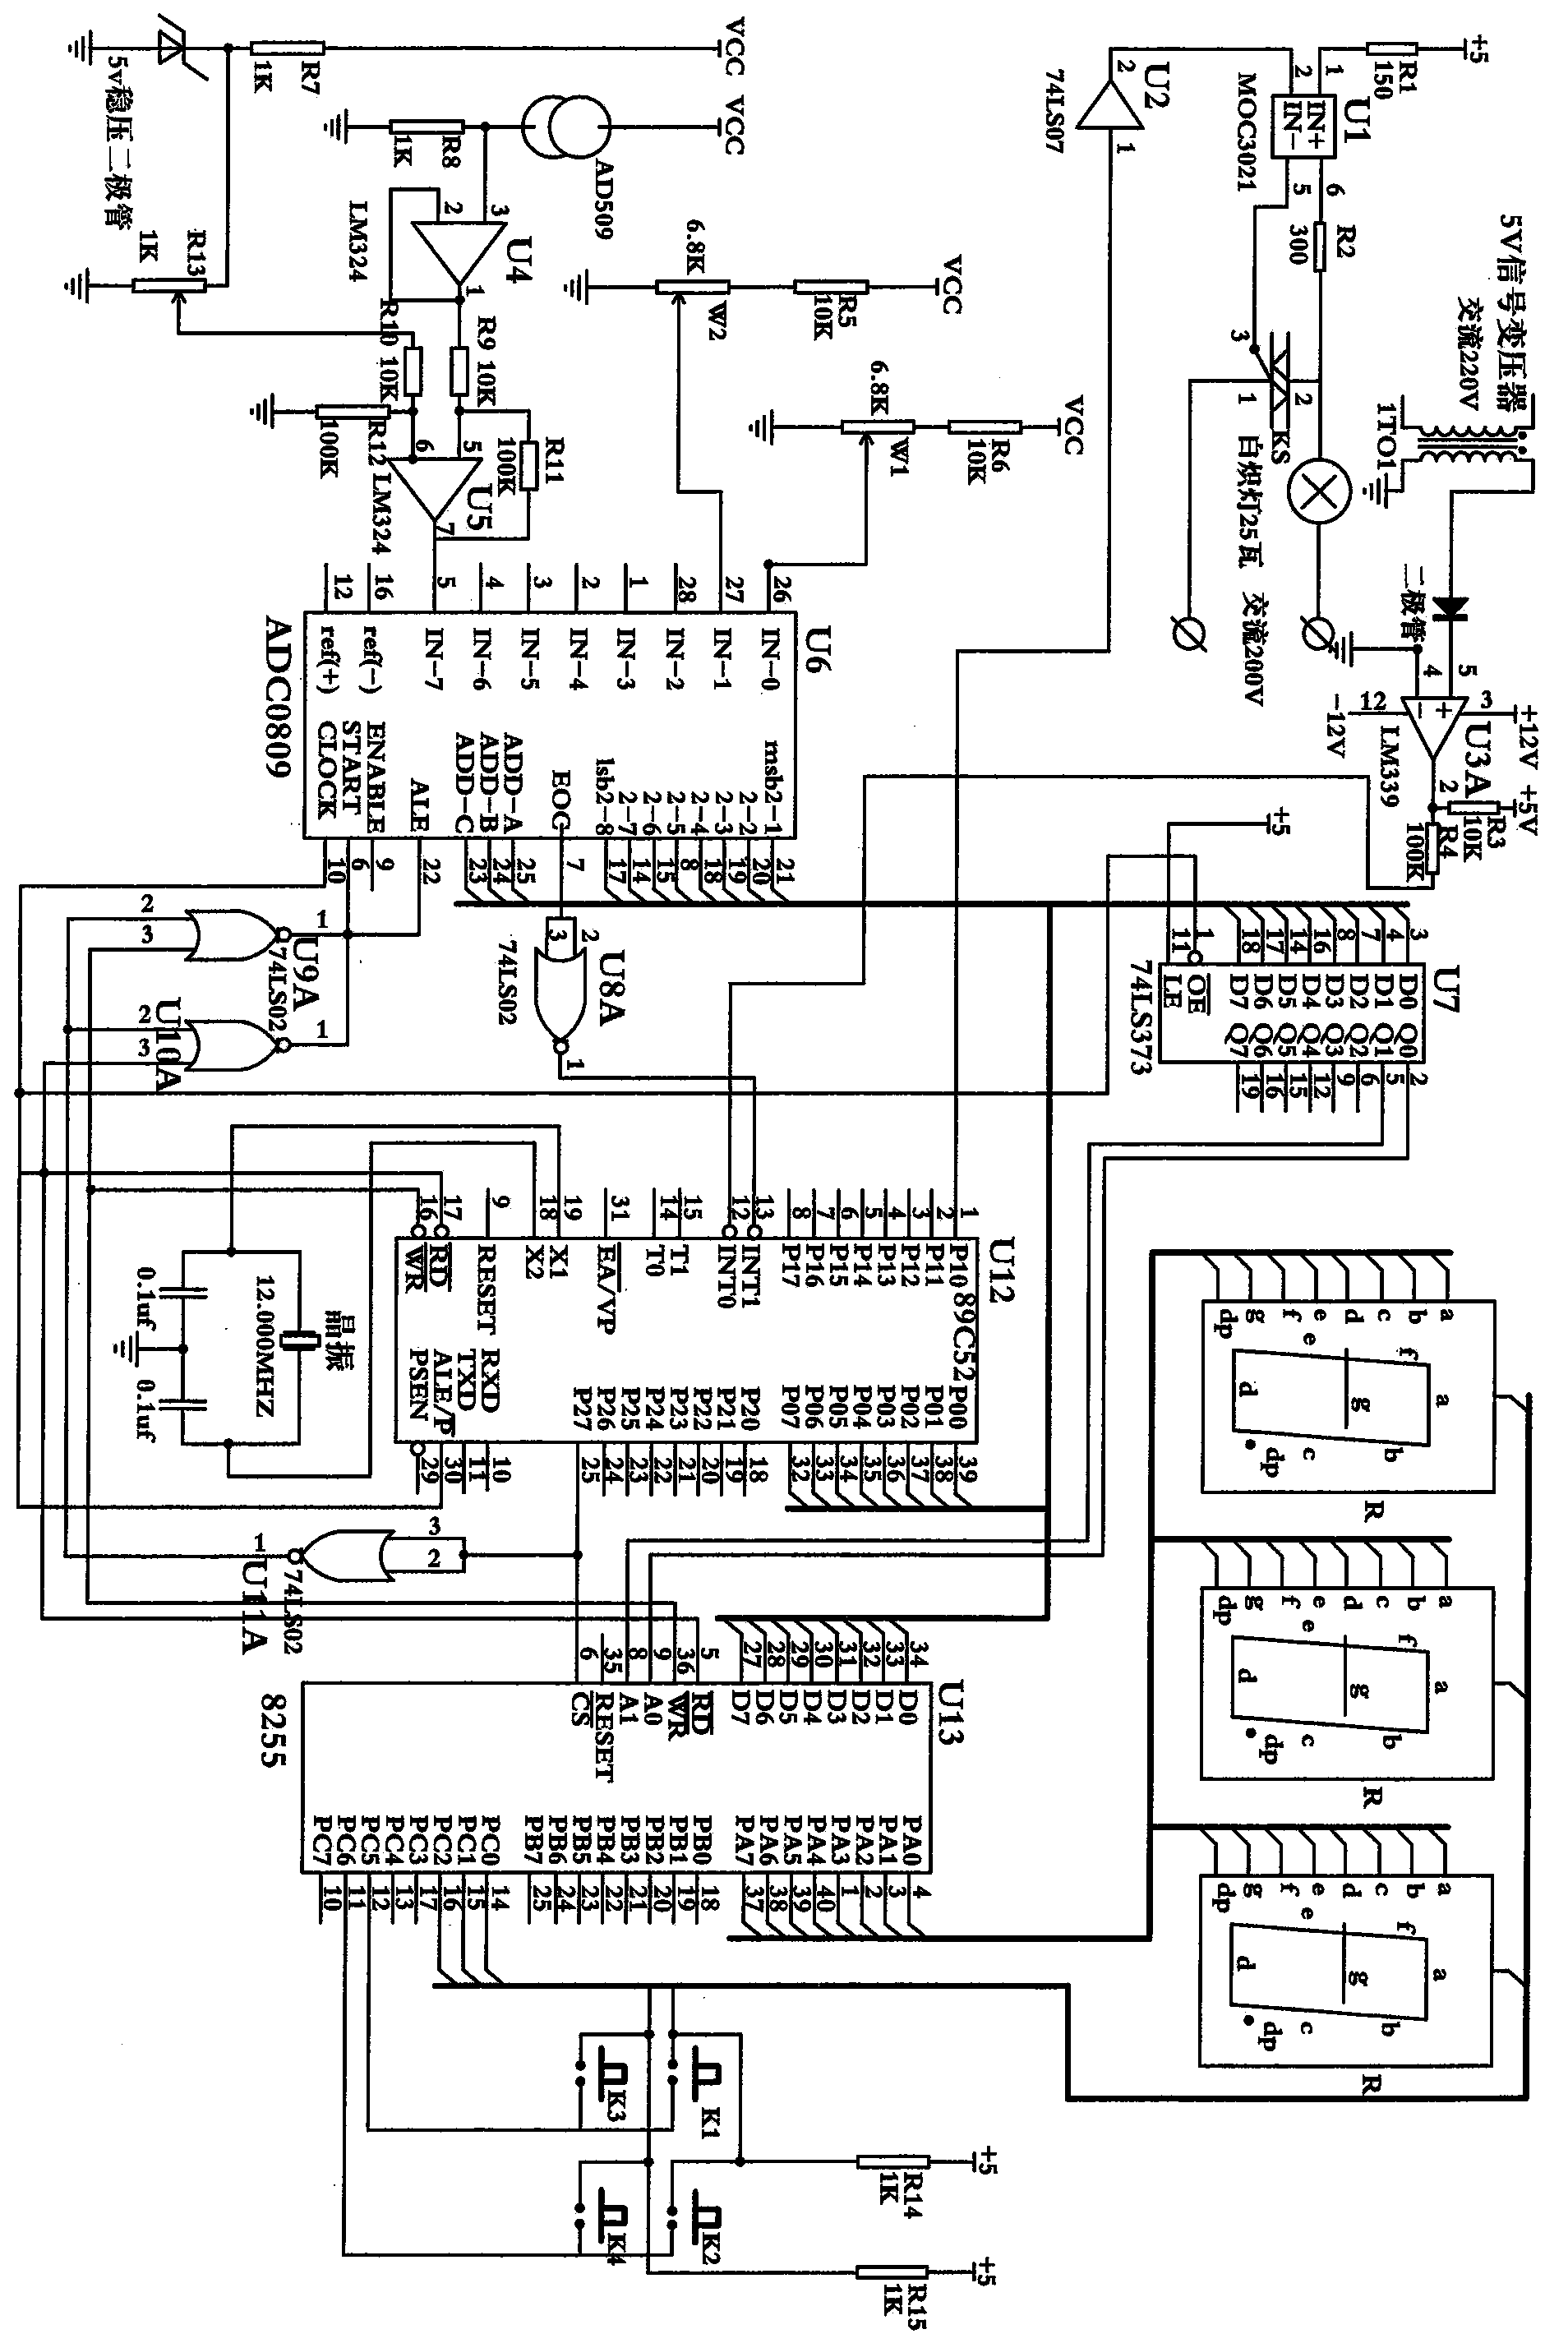 SCM-controlled (single-chip microcomputer) soil-animal separator